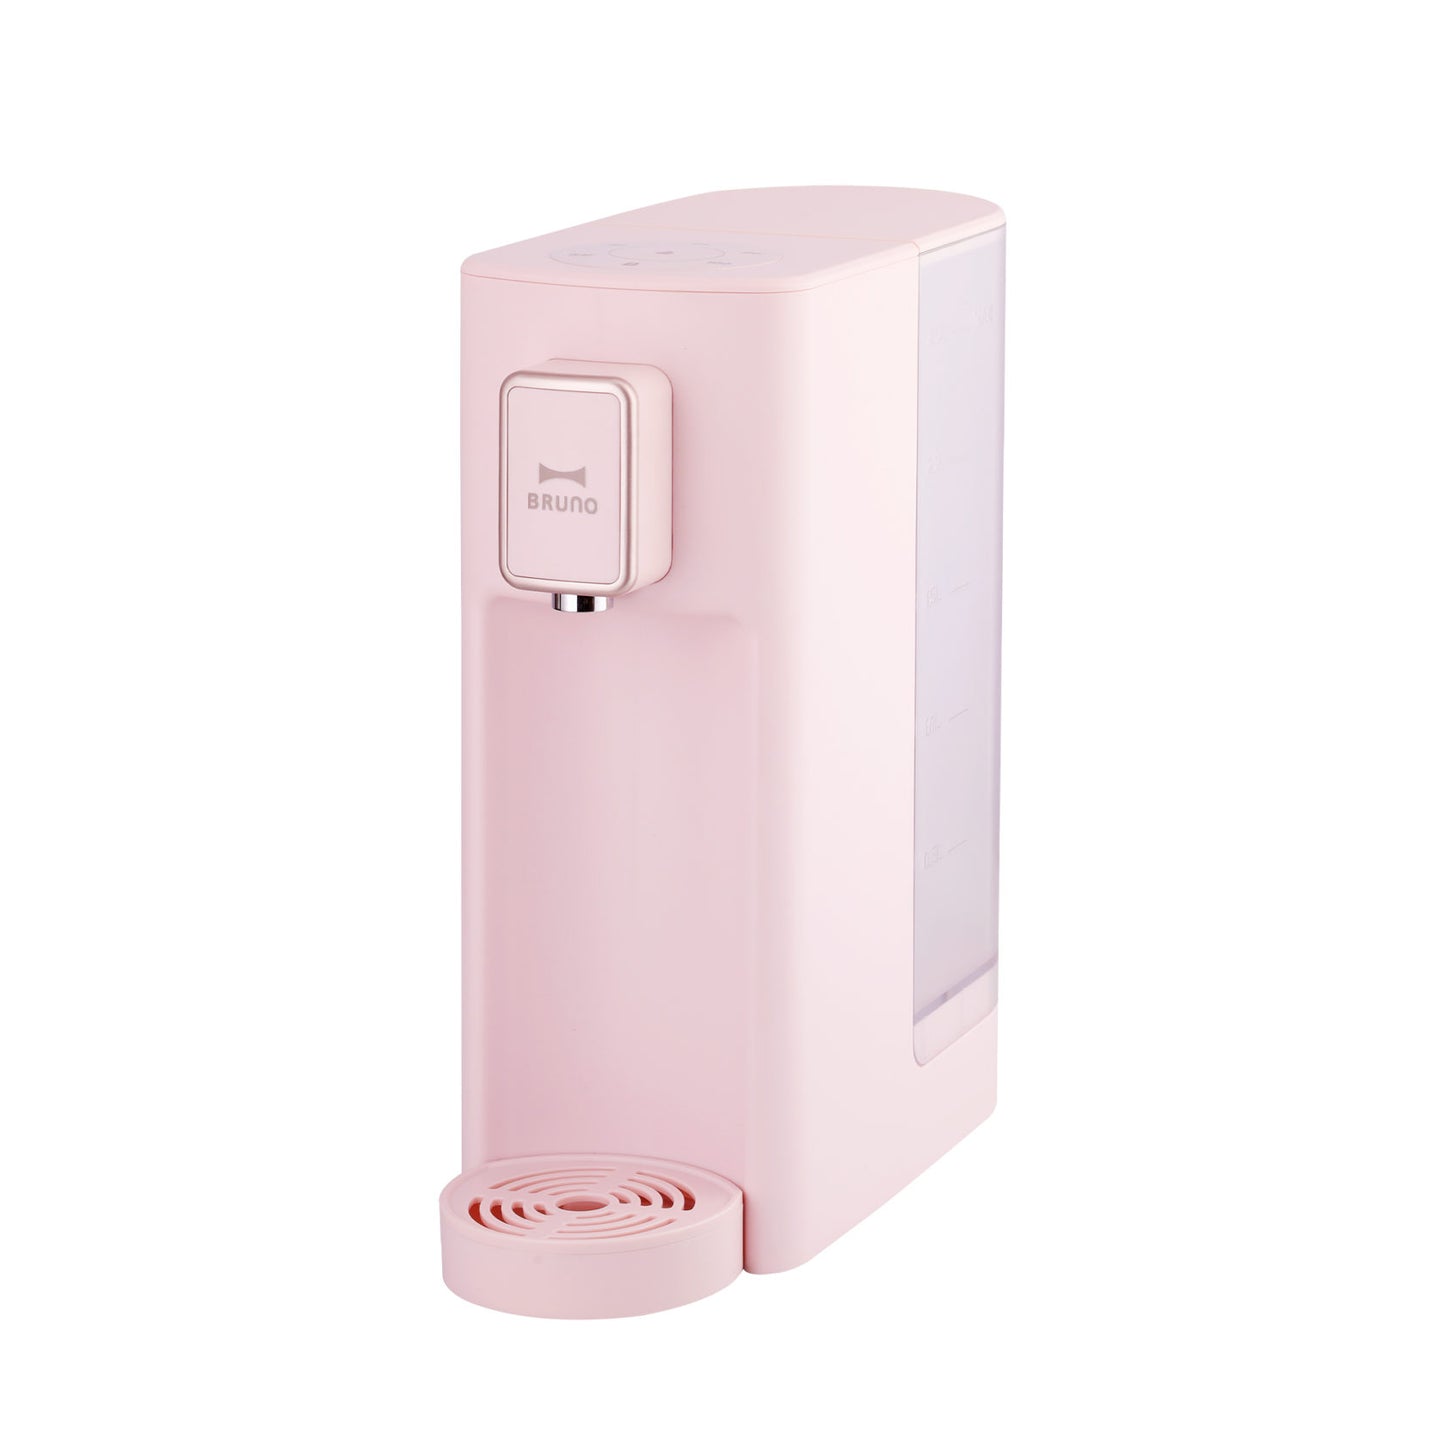 Hot Water Dispenser in Pink